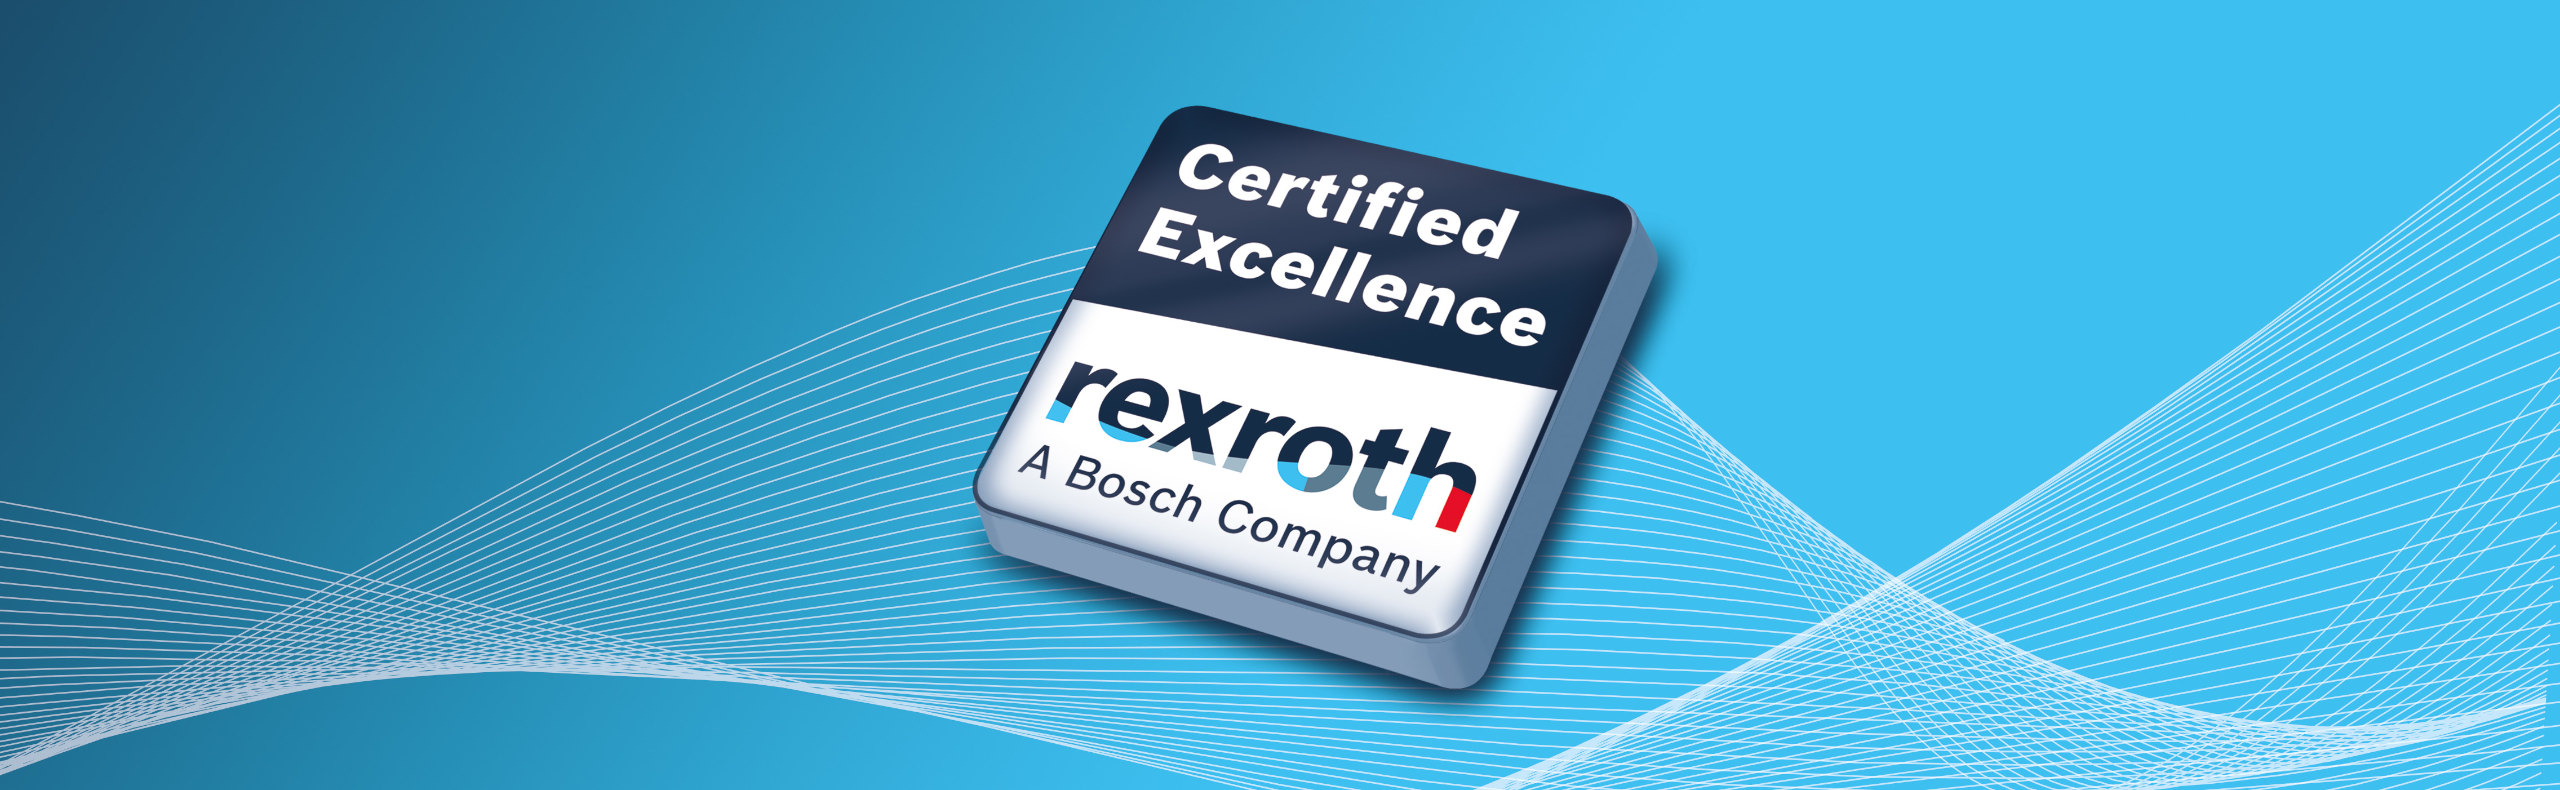 Bosch Rexroth Excellence Partner